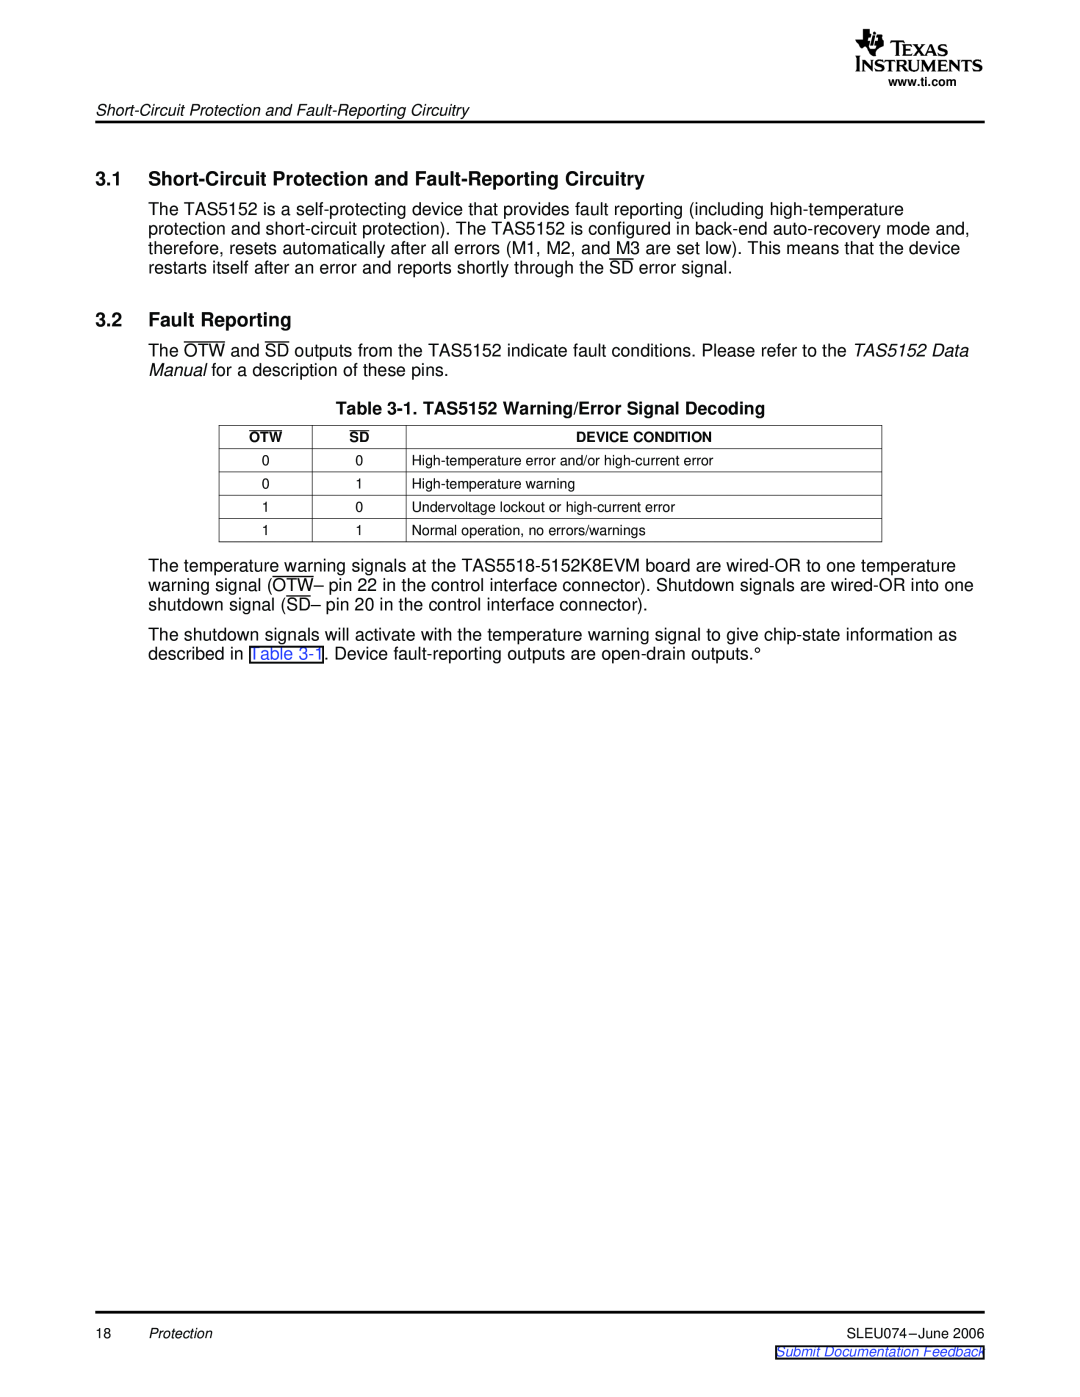 Texas Instruments TAS5518 manual 3.2Fault Reporting, 1.TAS5152 Warning/Error Signal Decoding 